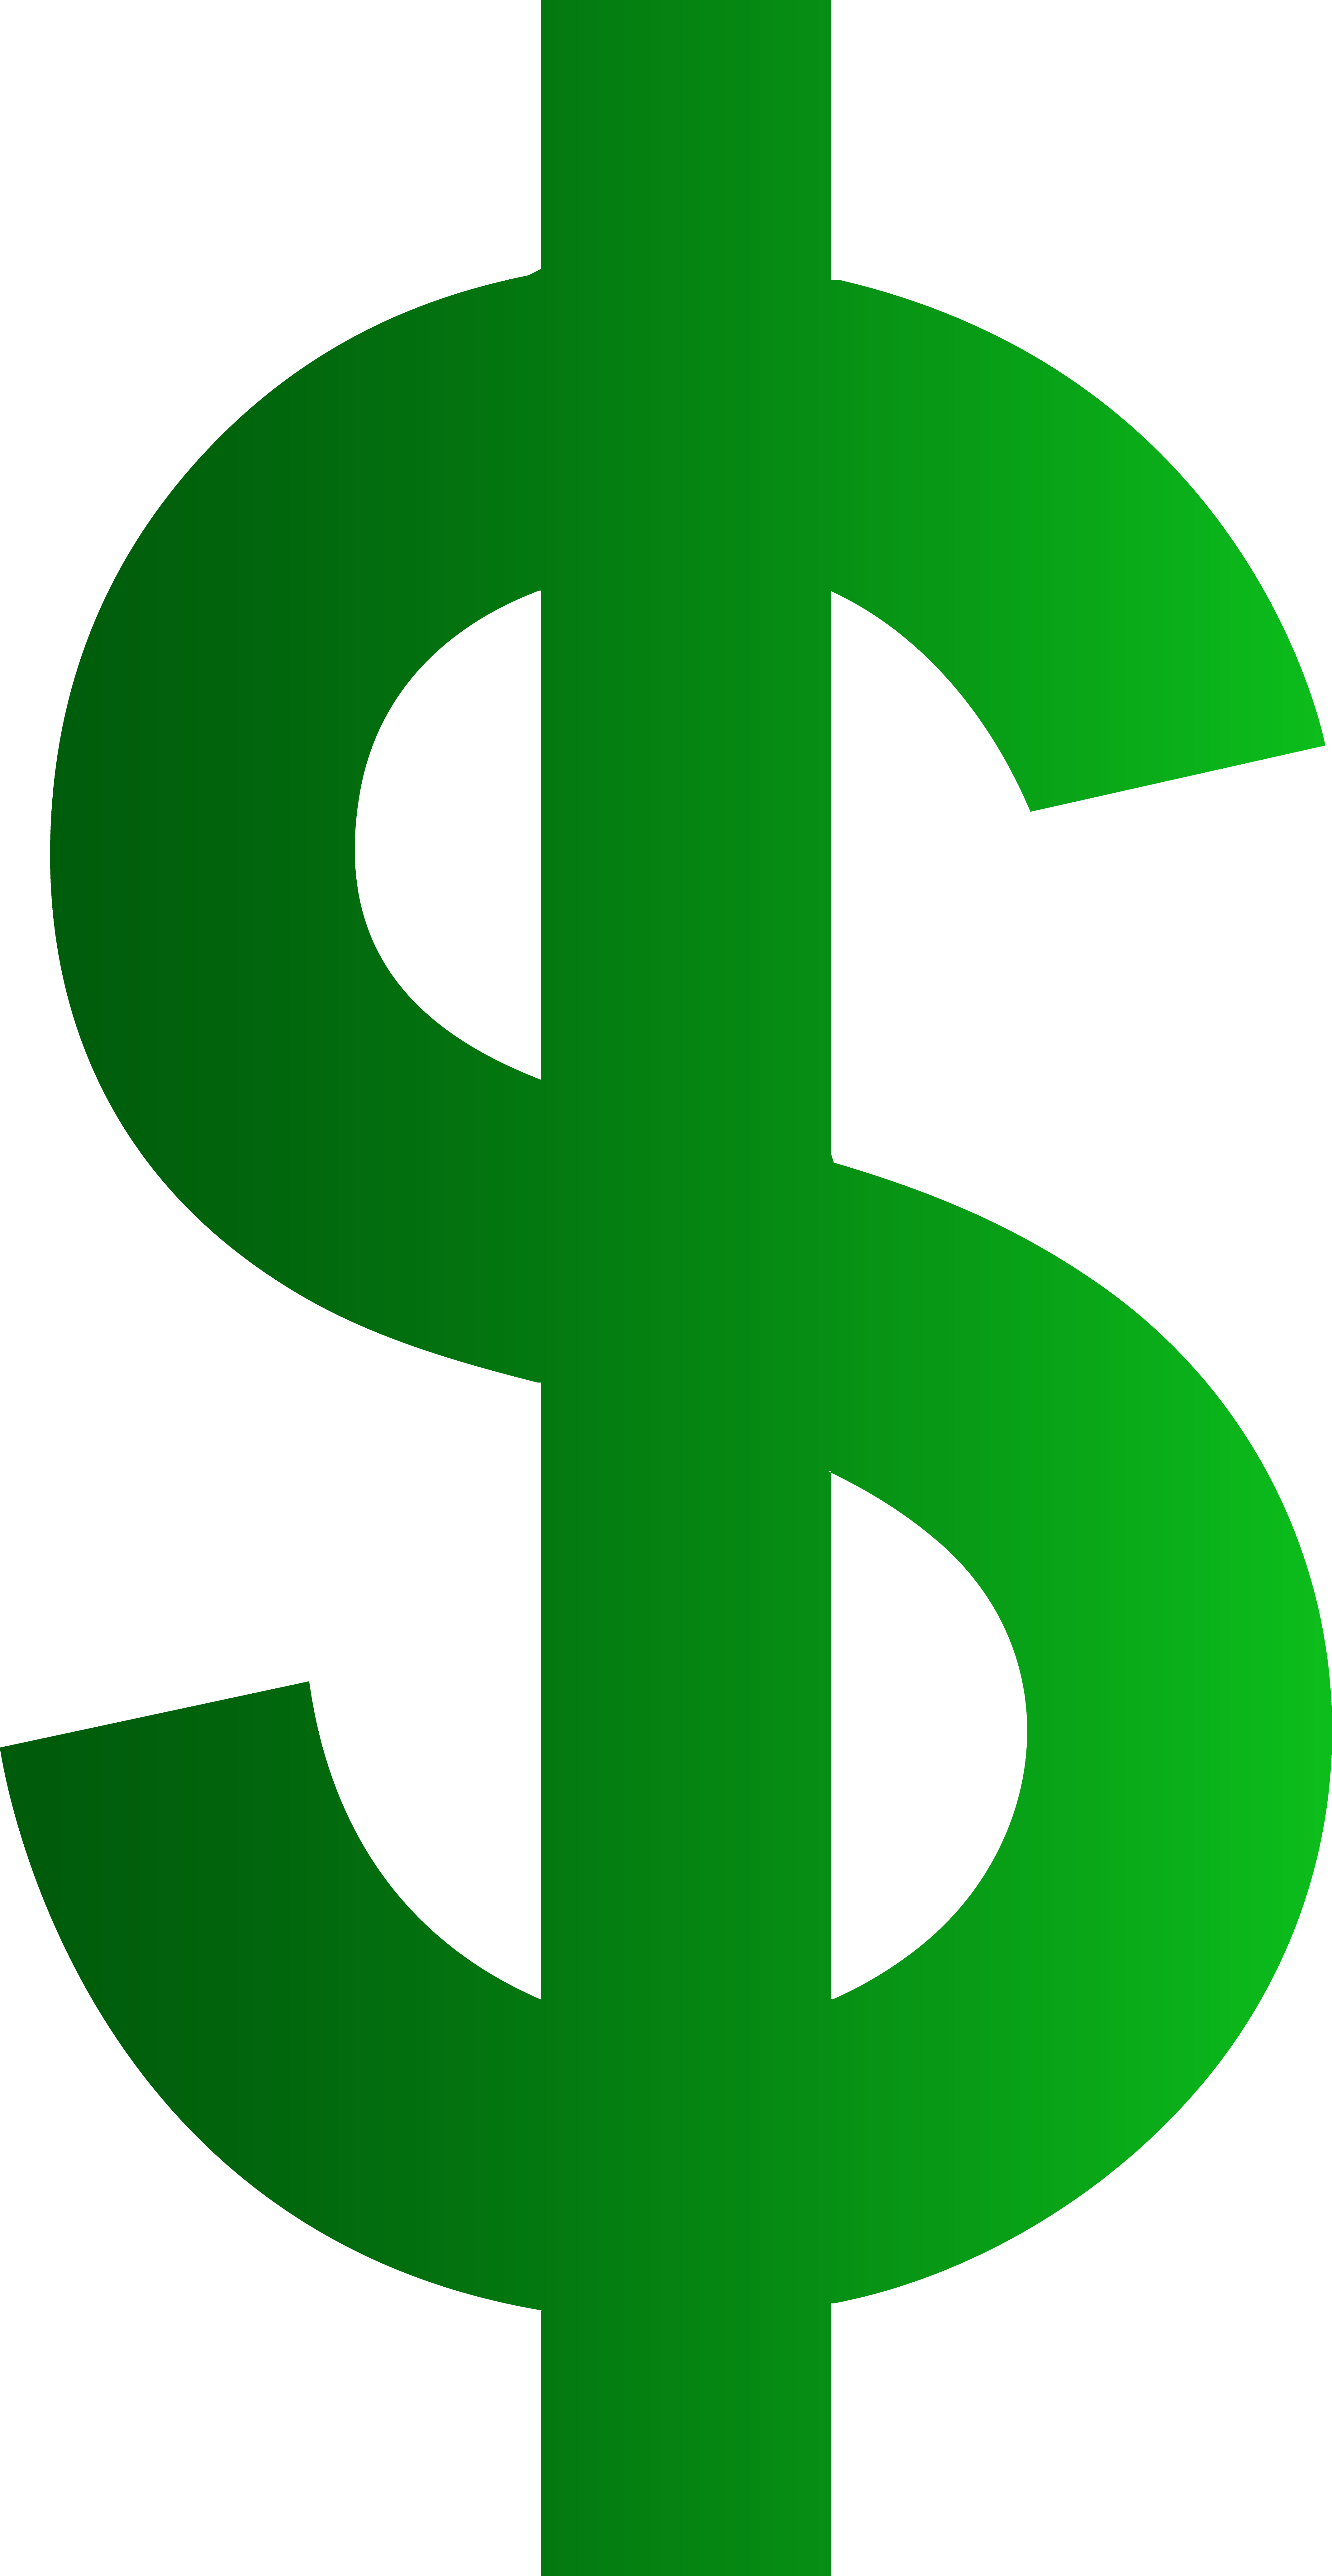 Green Dollar Symbol PNG Image